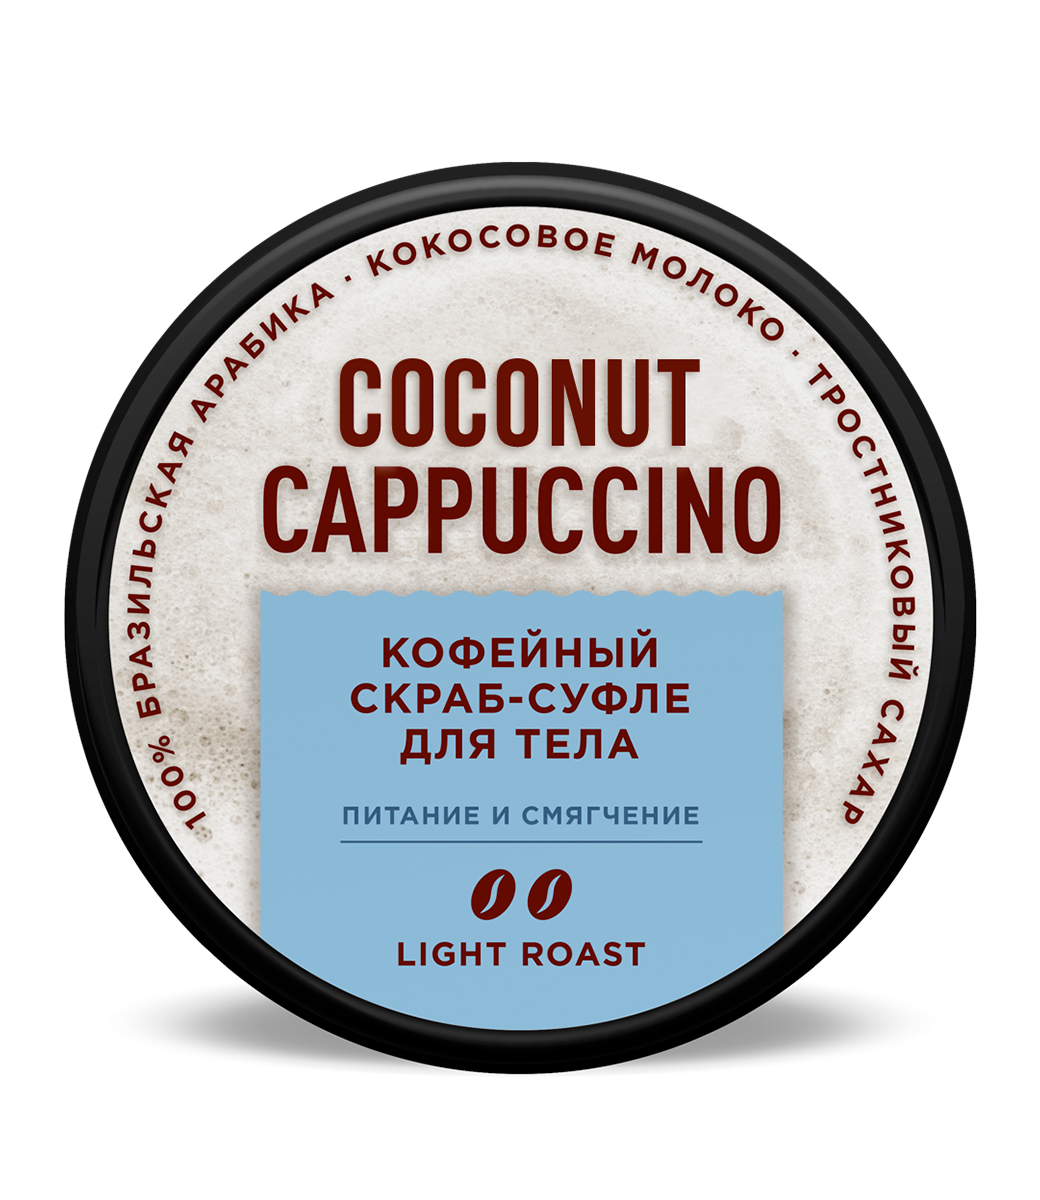 картинка Only Bio Coffee Original скраб-суфле для тела Coconut Cappuccino